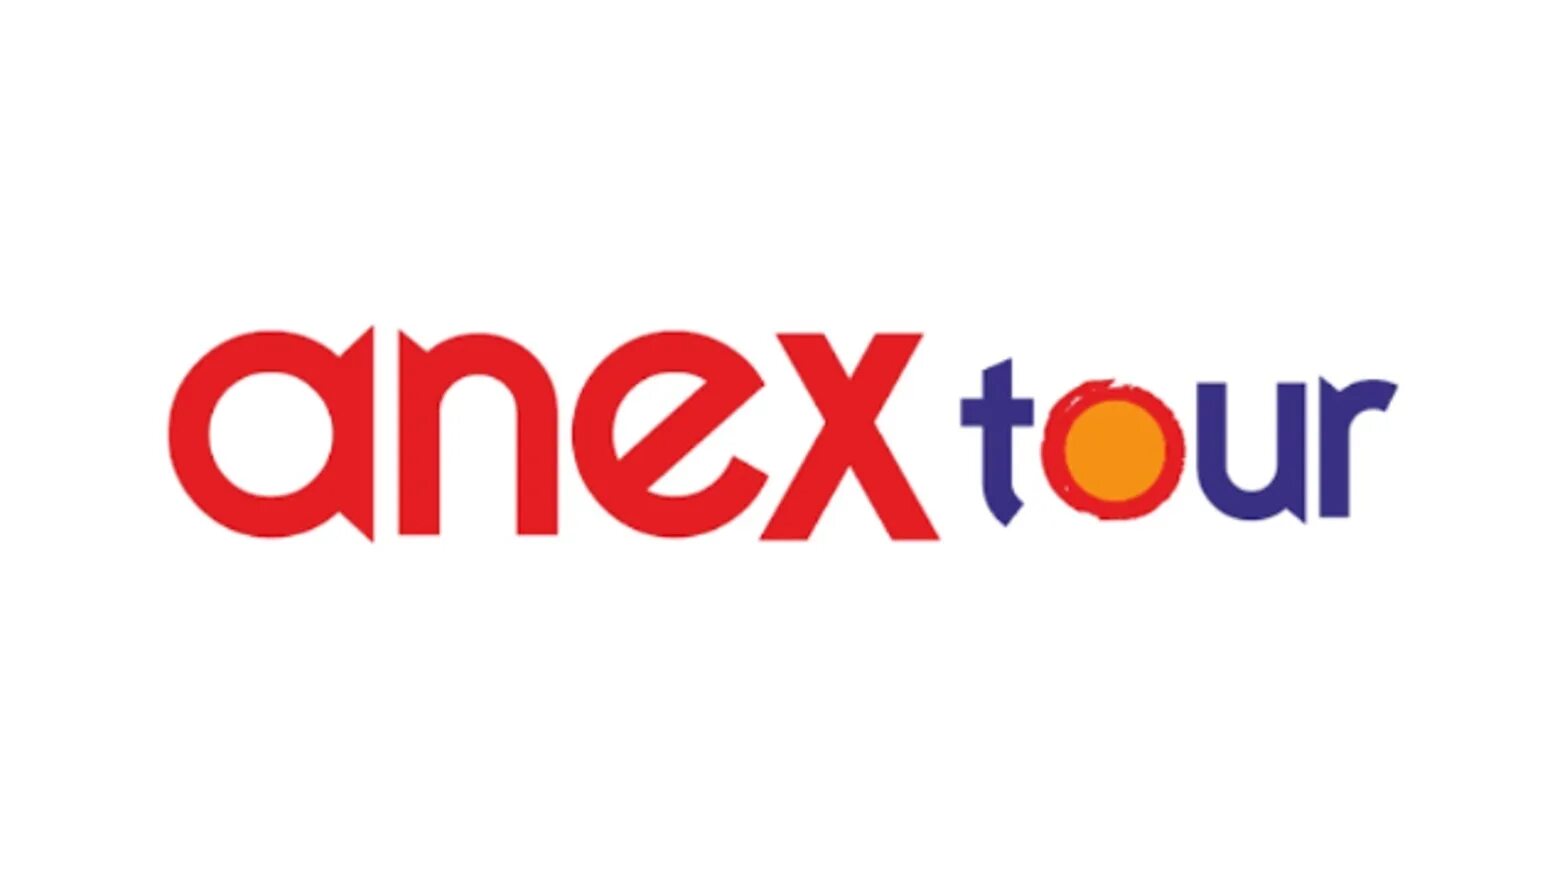 Anex логотип. Анекс тур эмблема. Логотип Анекс тур на прозрачном фоне. Слоган Анекс тур.